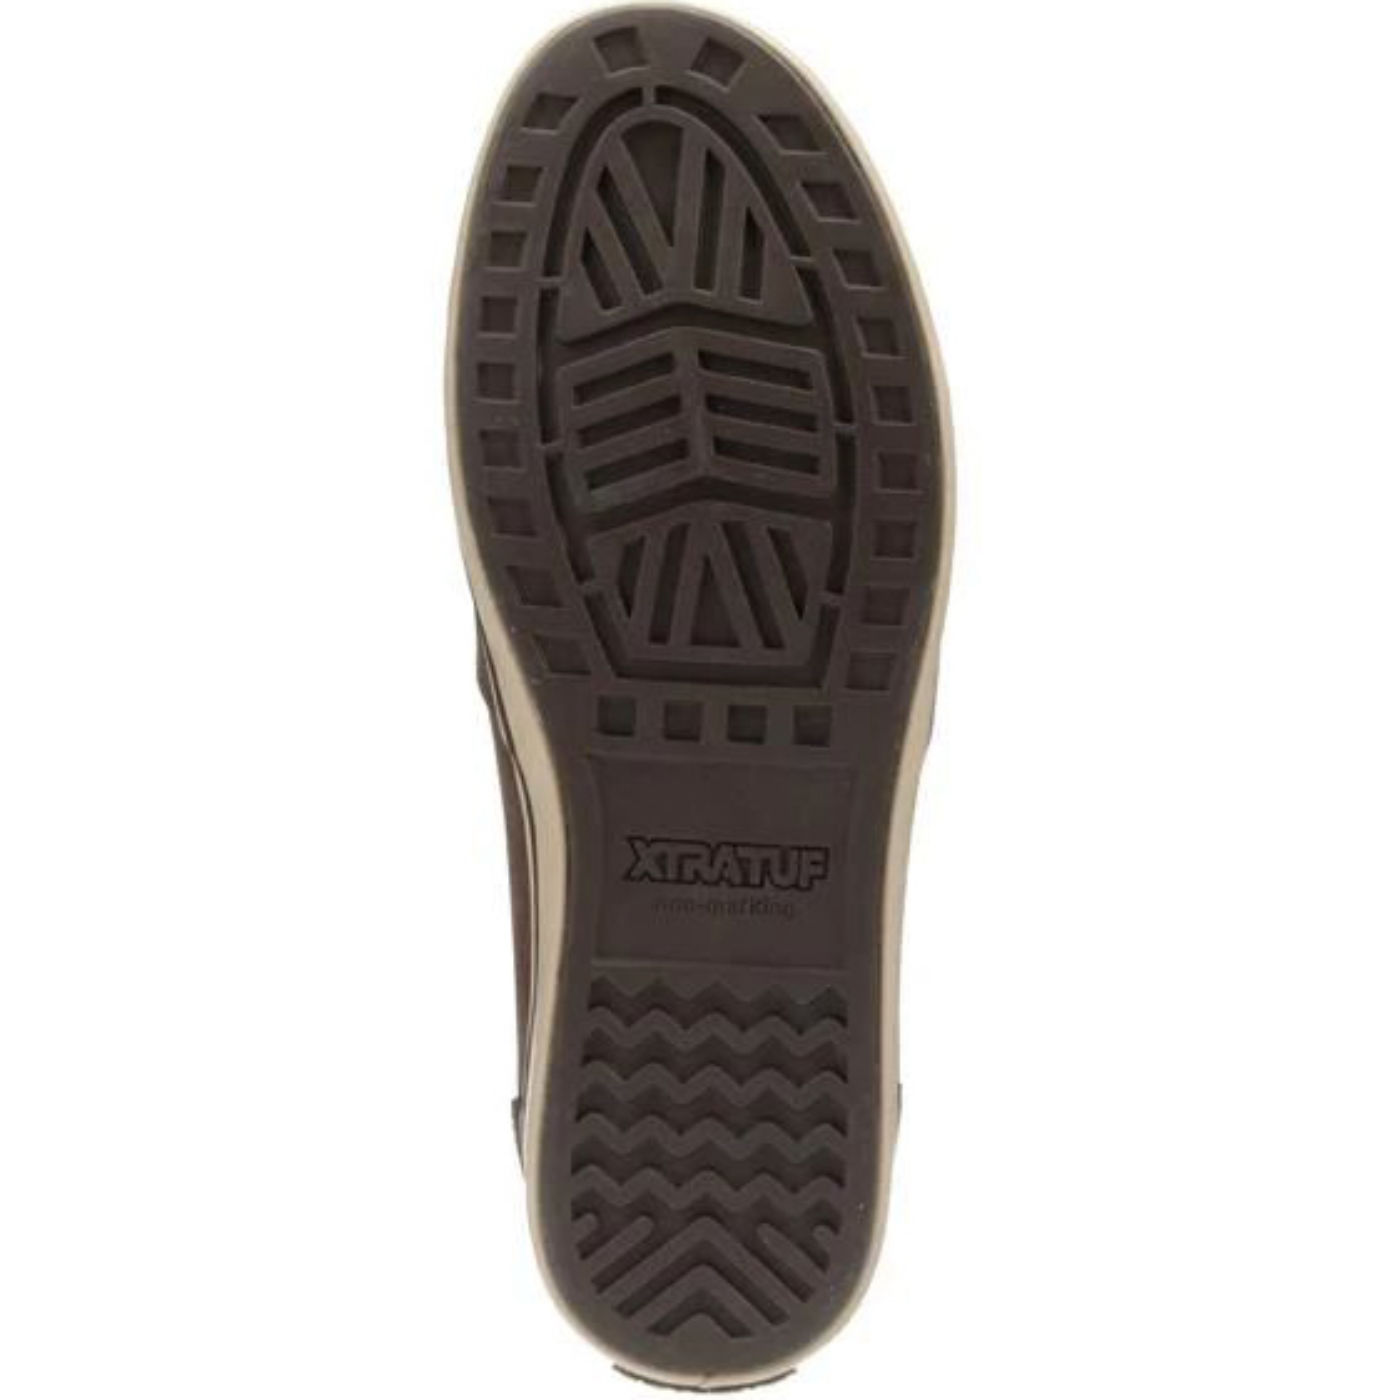 Men's Leather Sharkbyte Deck Shoe Size 8(M) - image 2 of 7